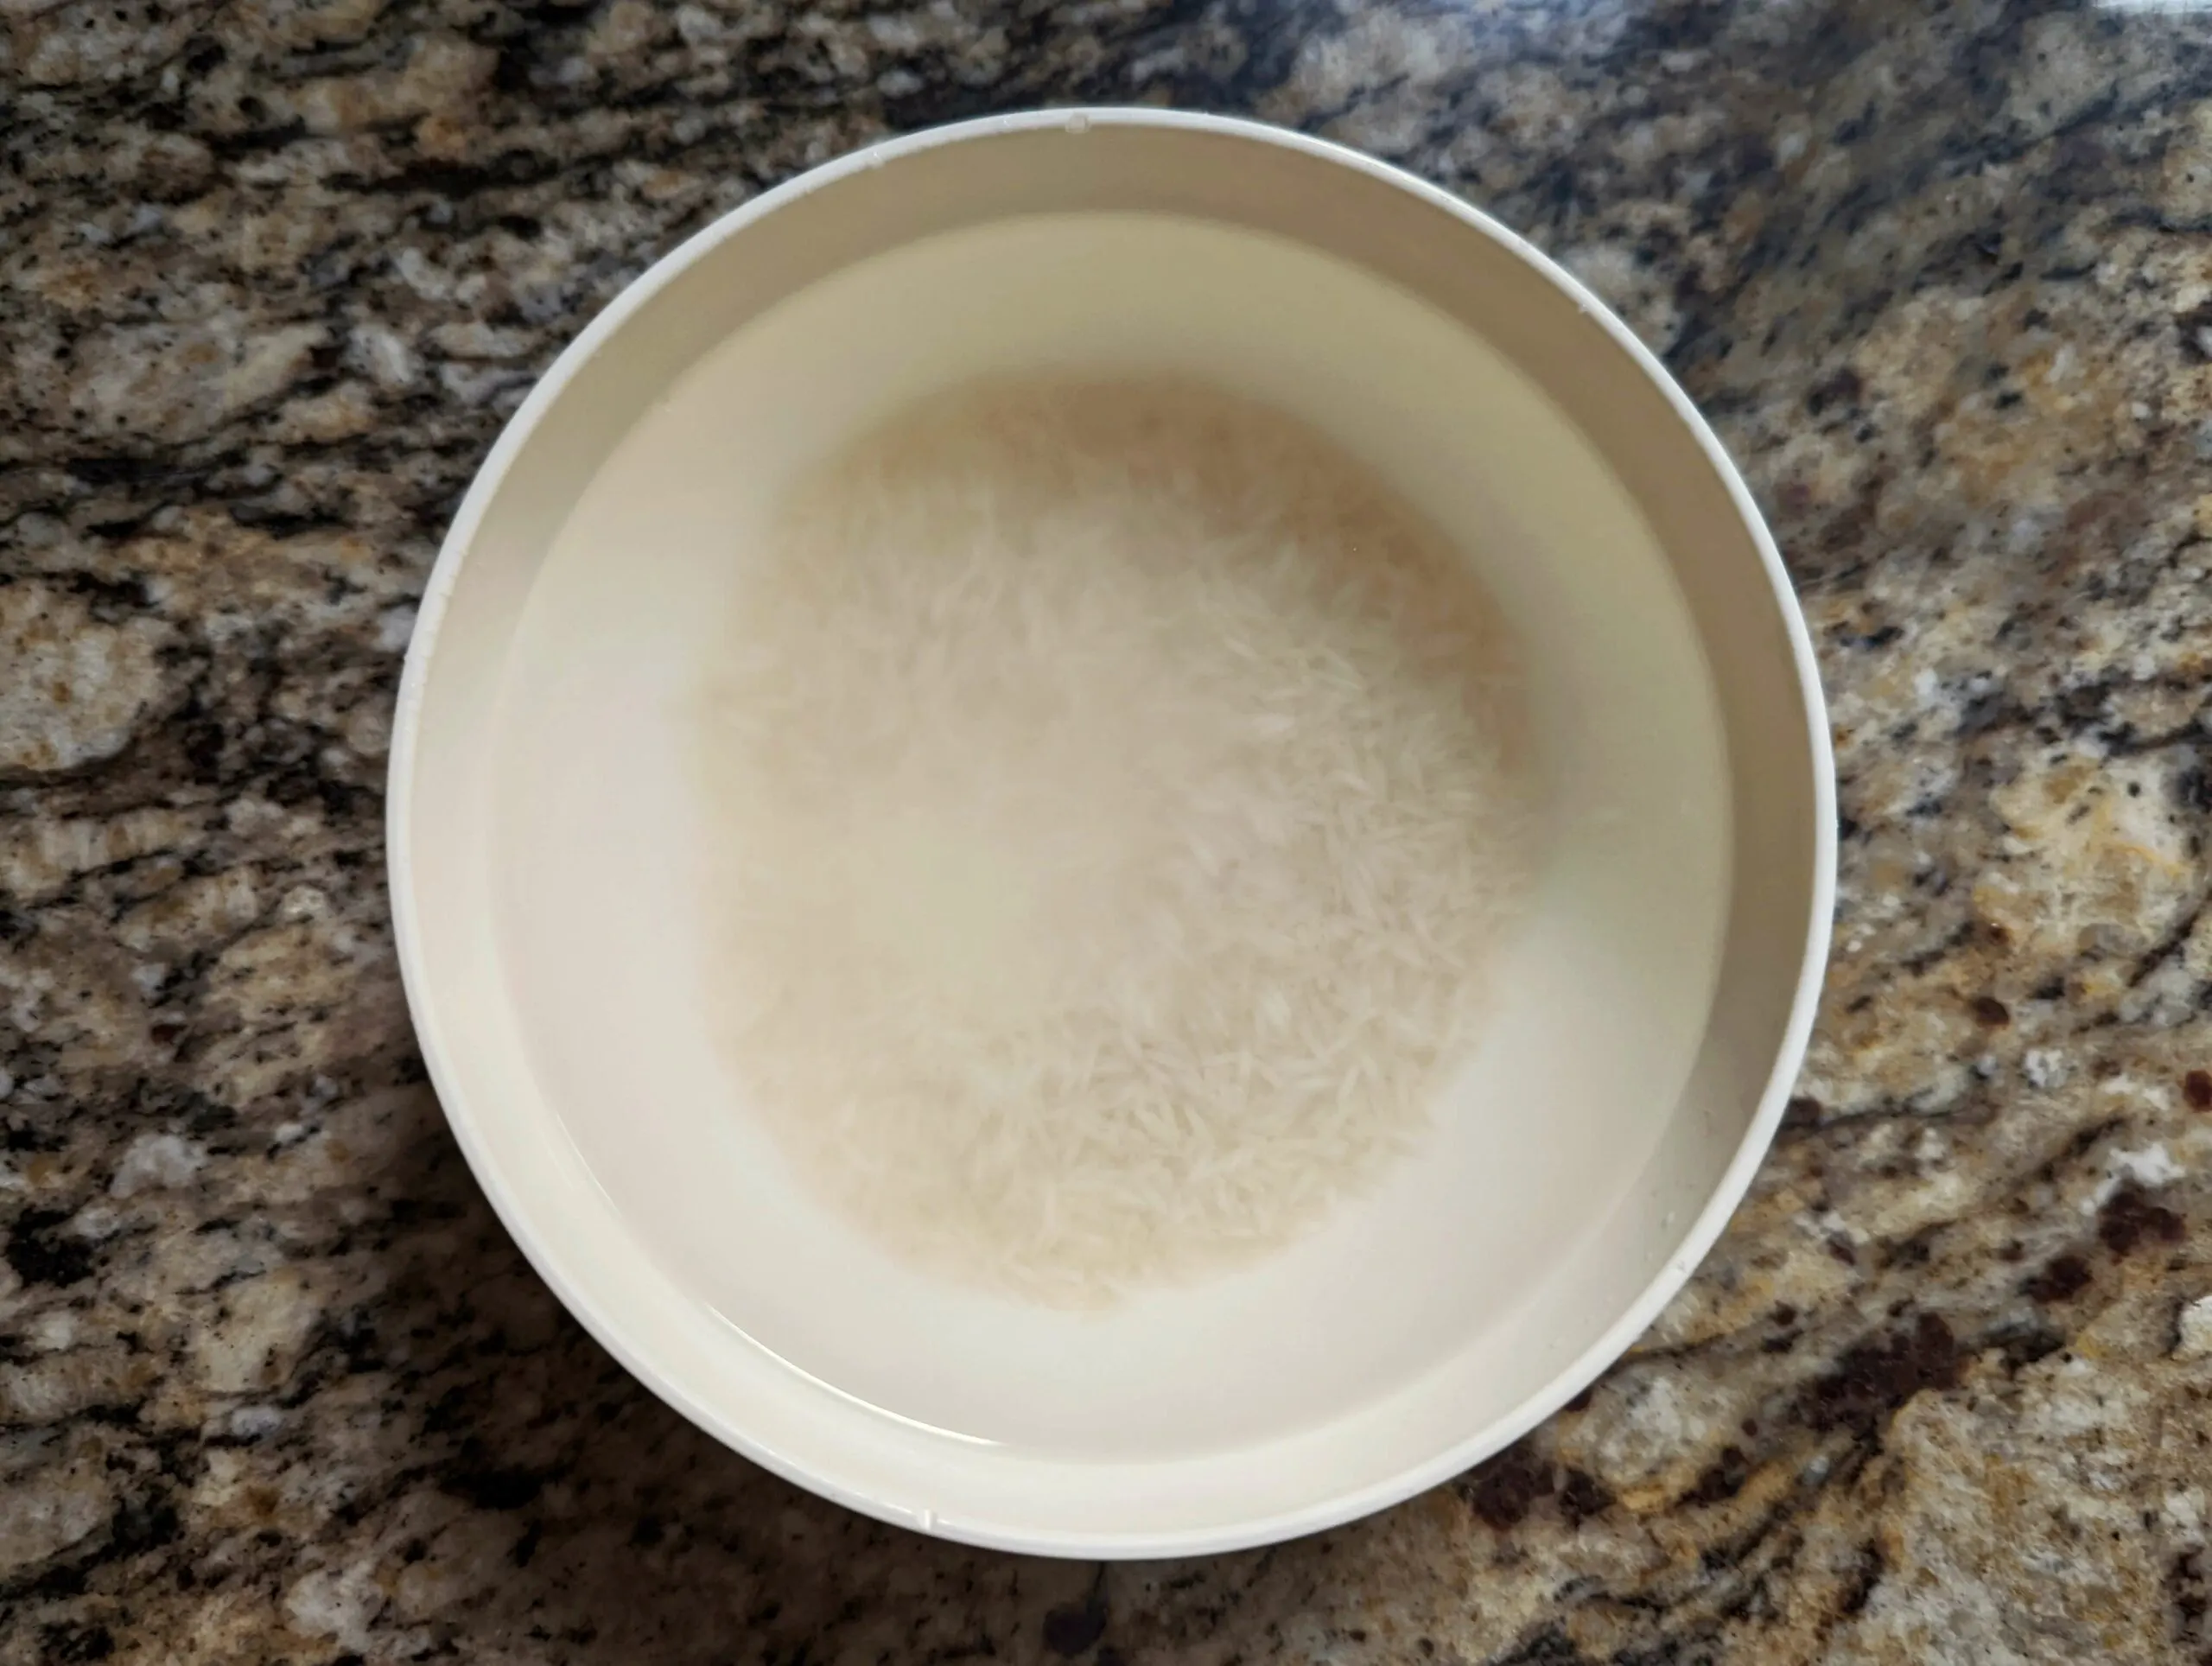 Rice soaking in water. 